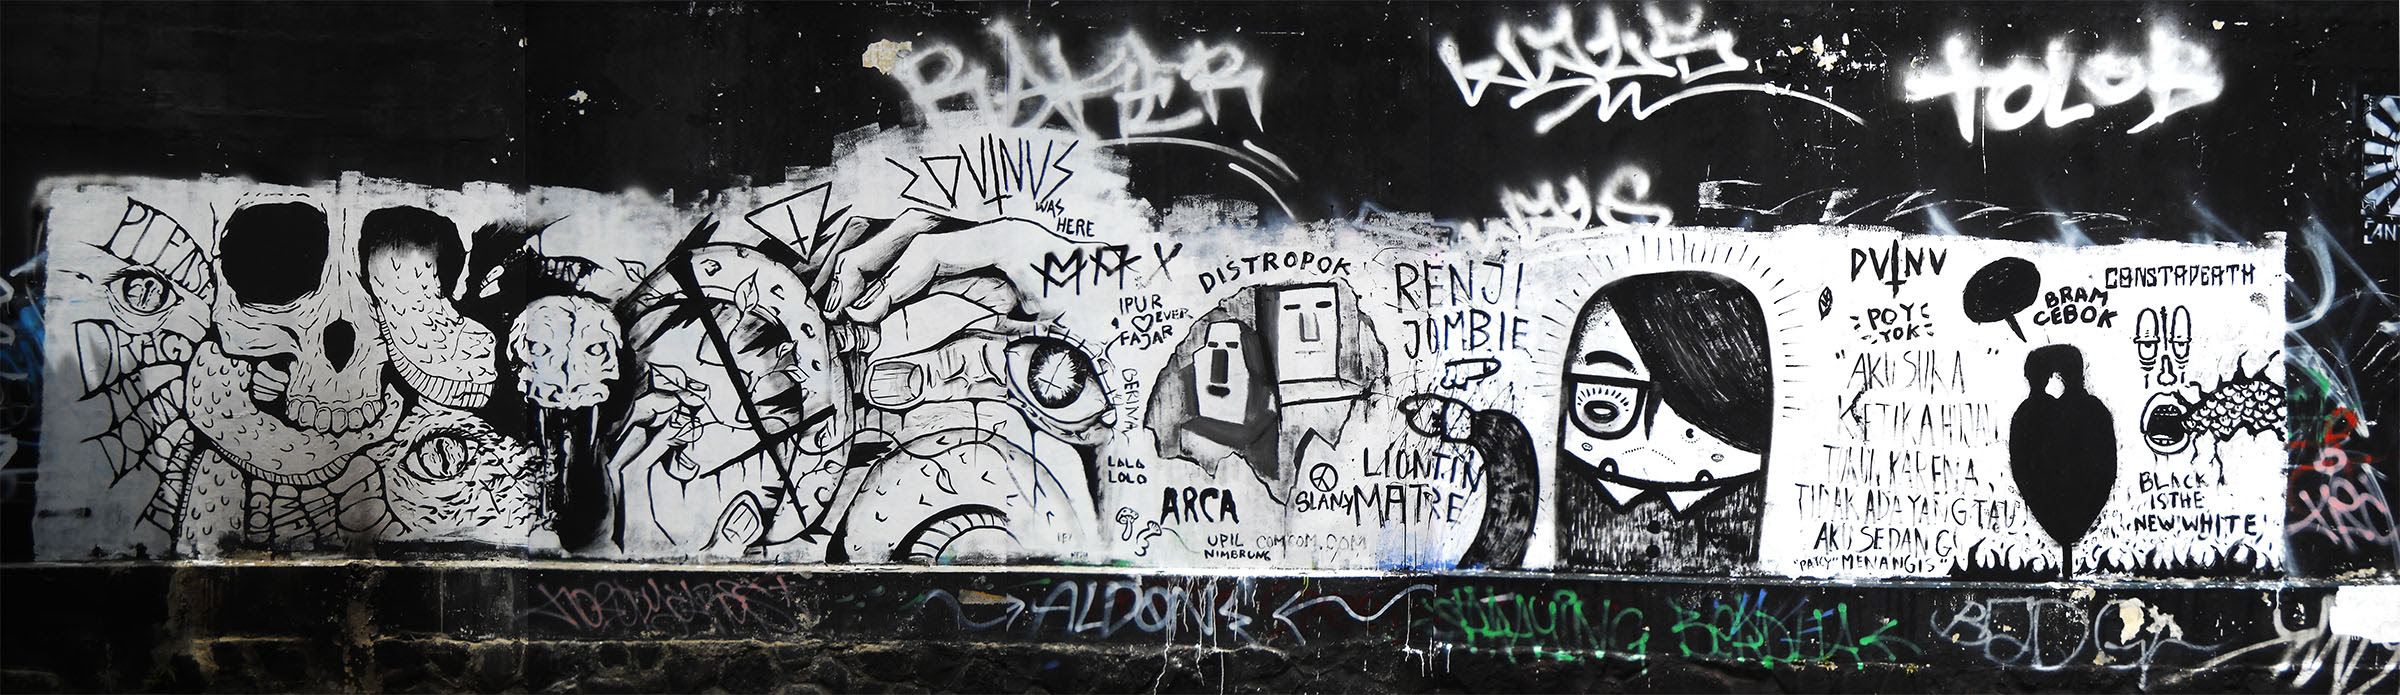  Gambar  Grafiti Gedung Hitam  Putih  Sobgrafiti